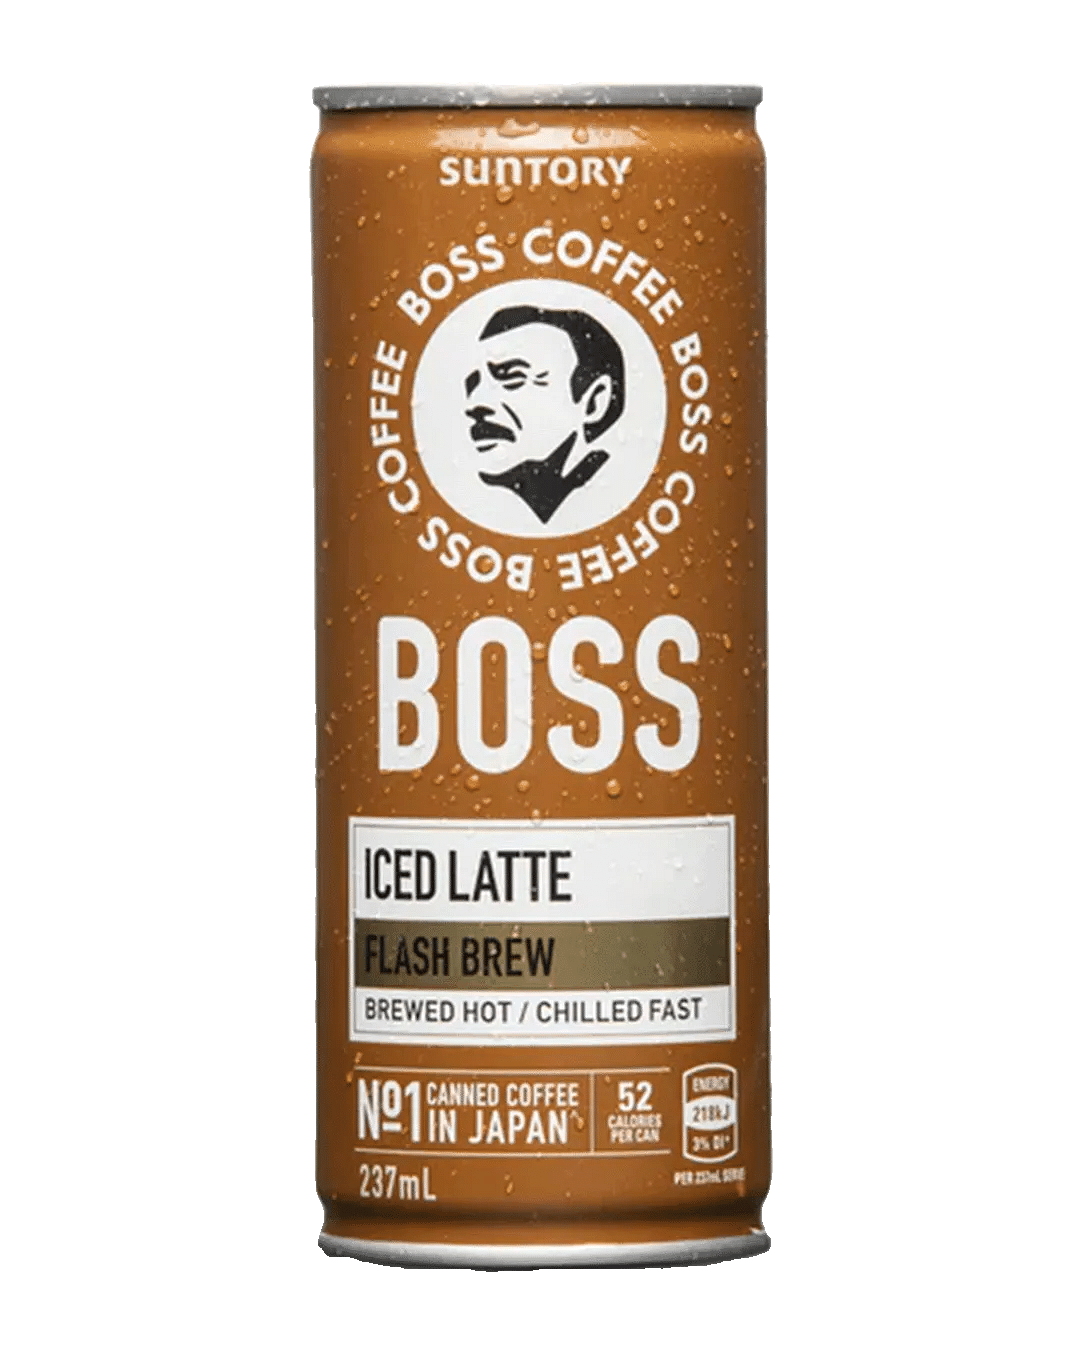 Suntory Boss Coffee Iced Latte